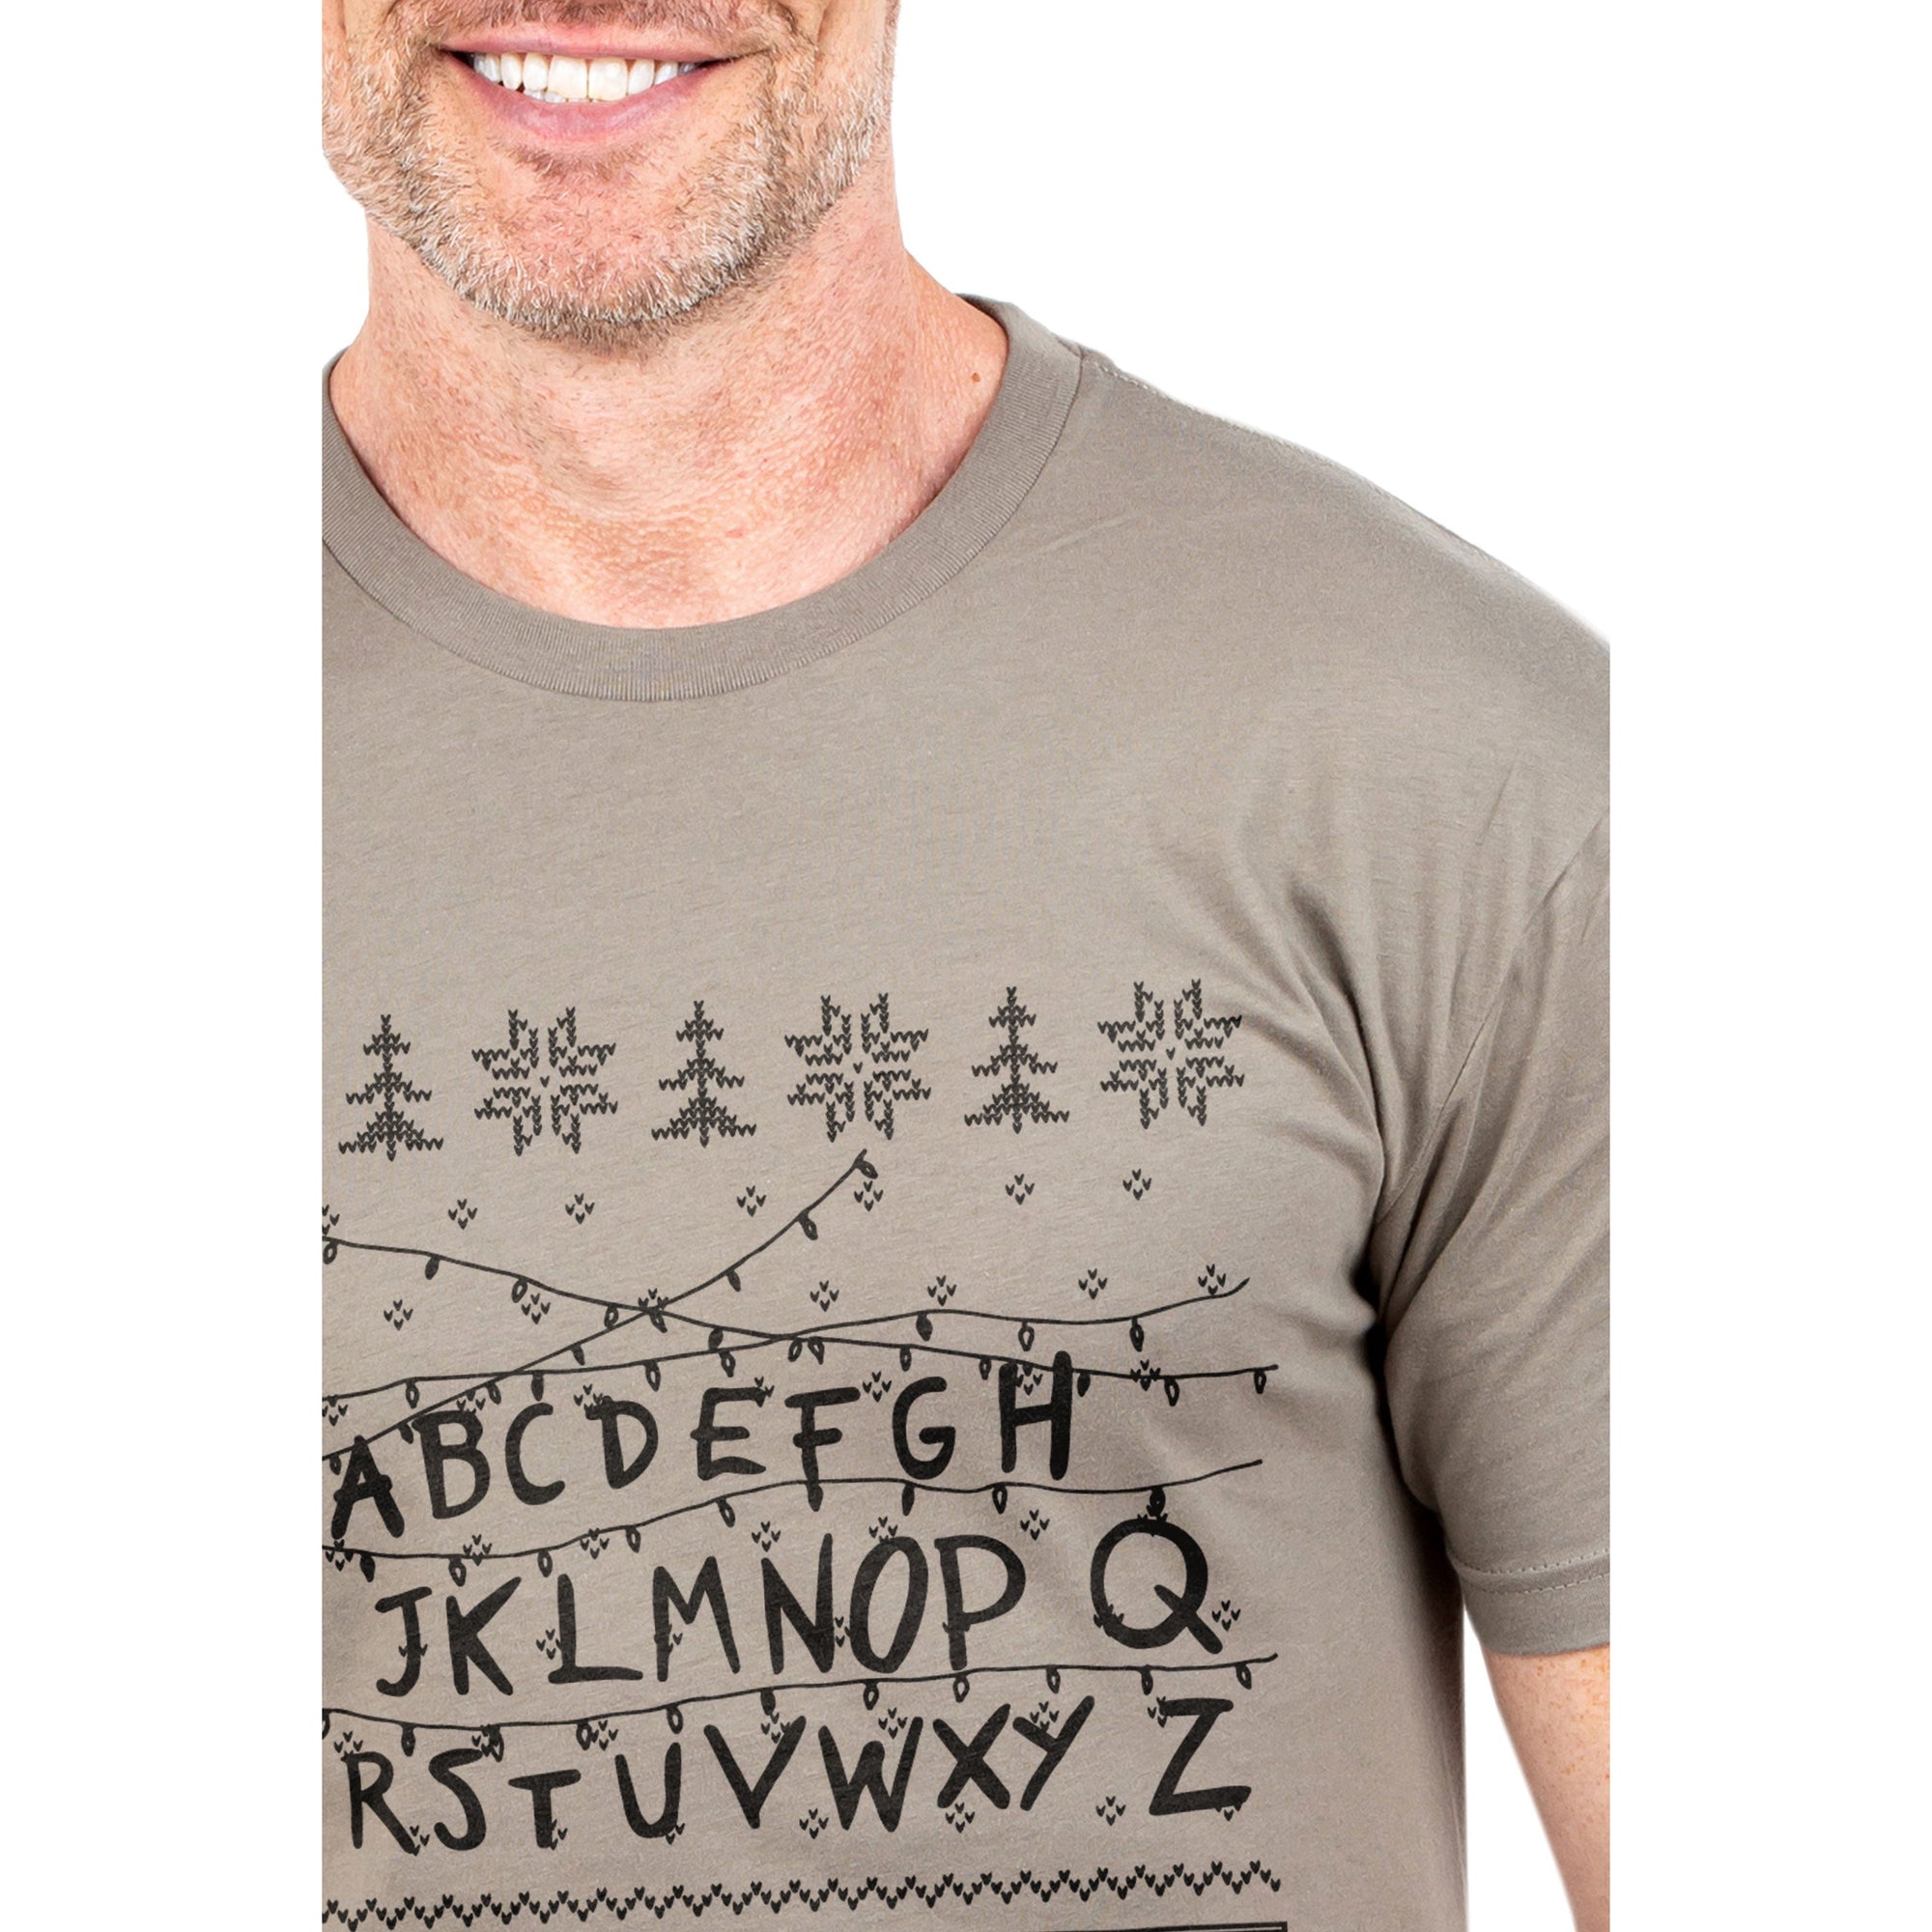 Stranger Christmas (Stranger Things) Printed Graphic Men's Crew T-Shirt Heather Tan Closeup Image